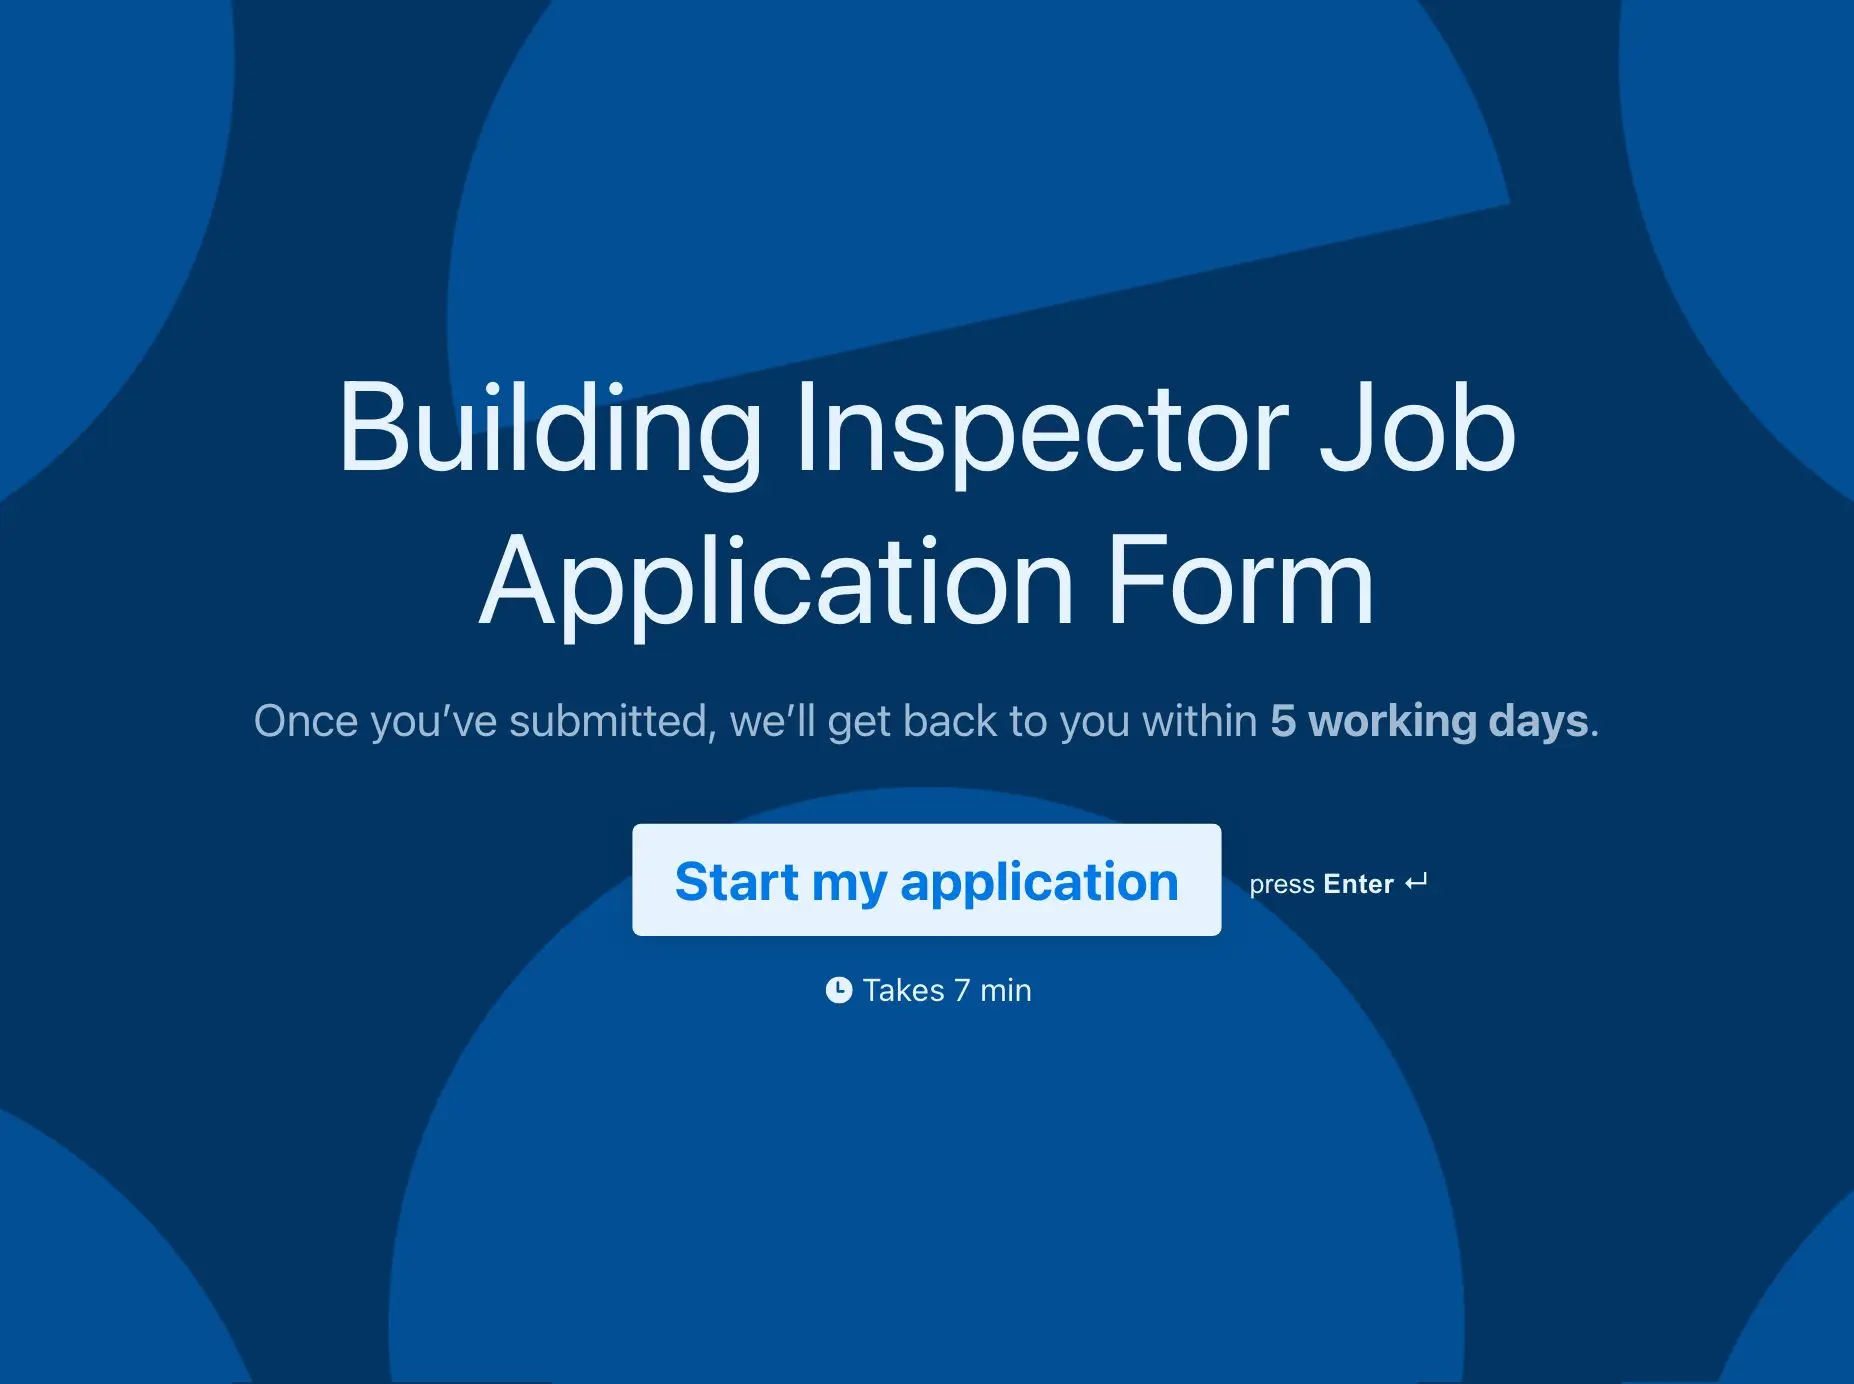 Building Inspector Job Application Form Template Hero